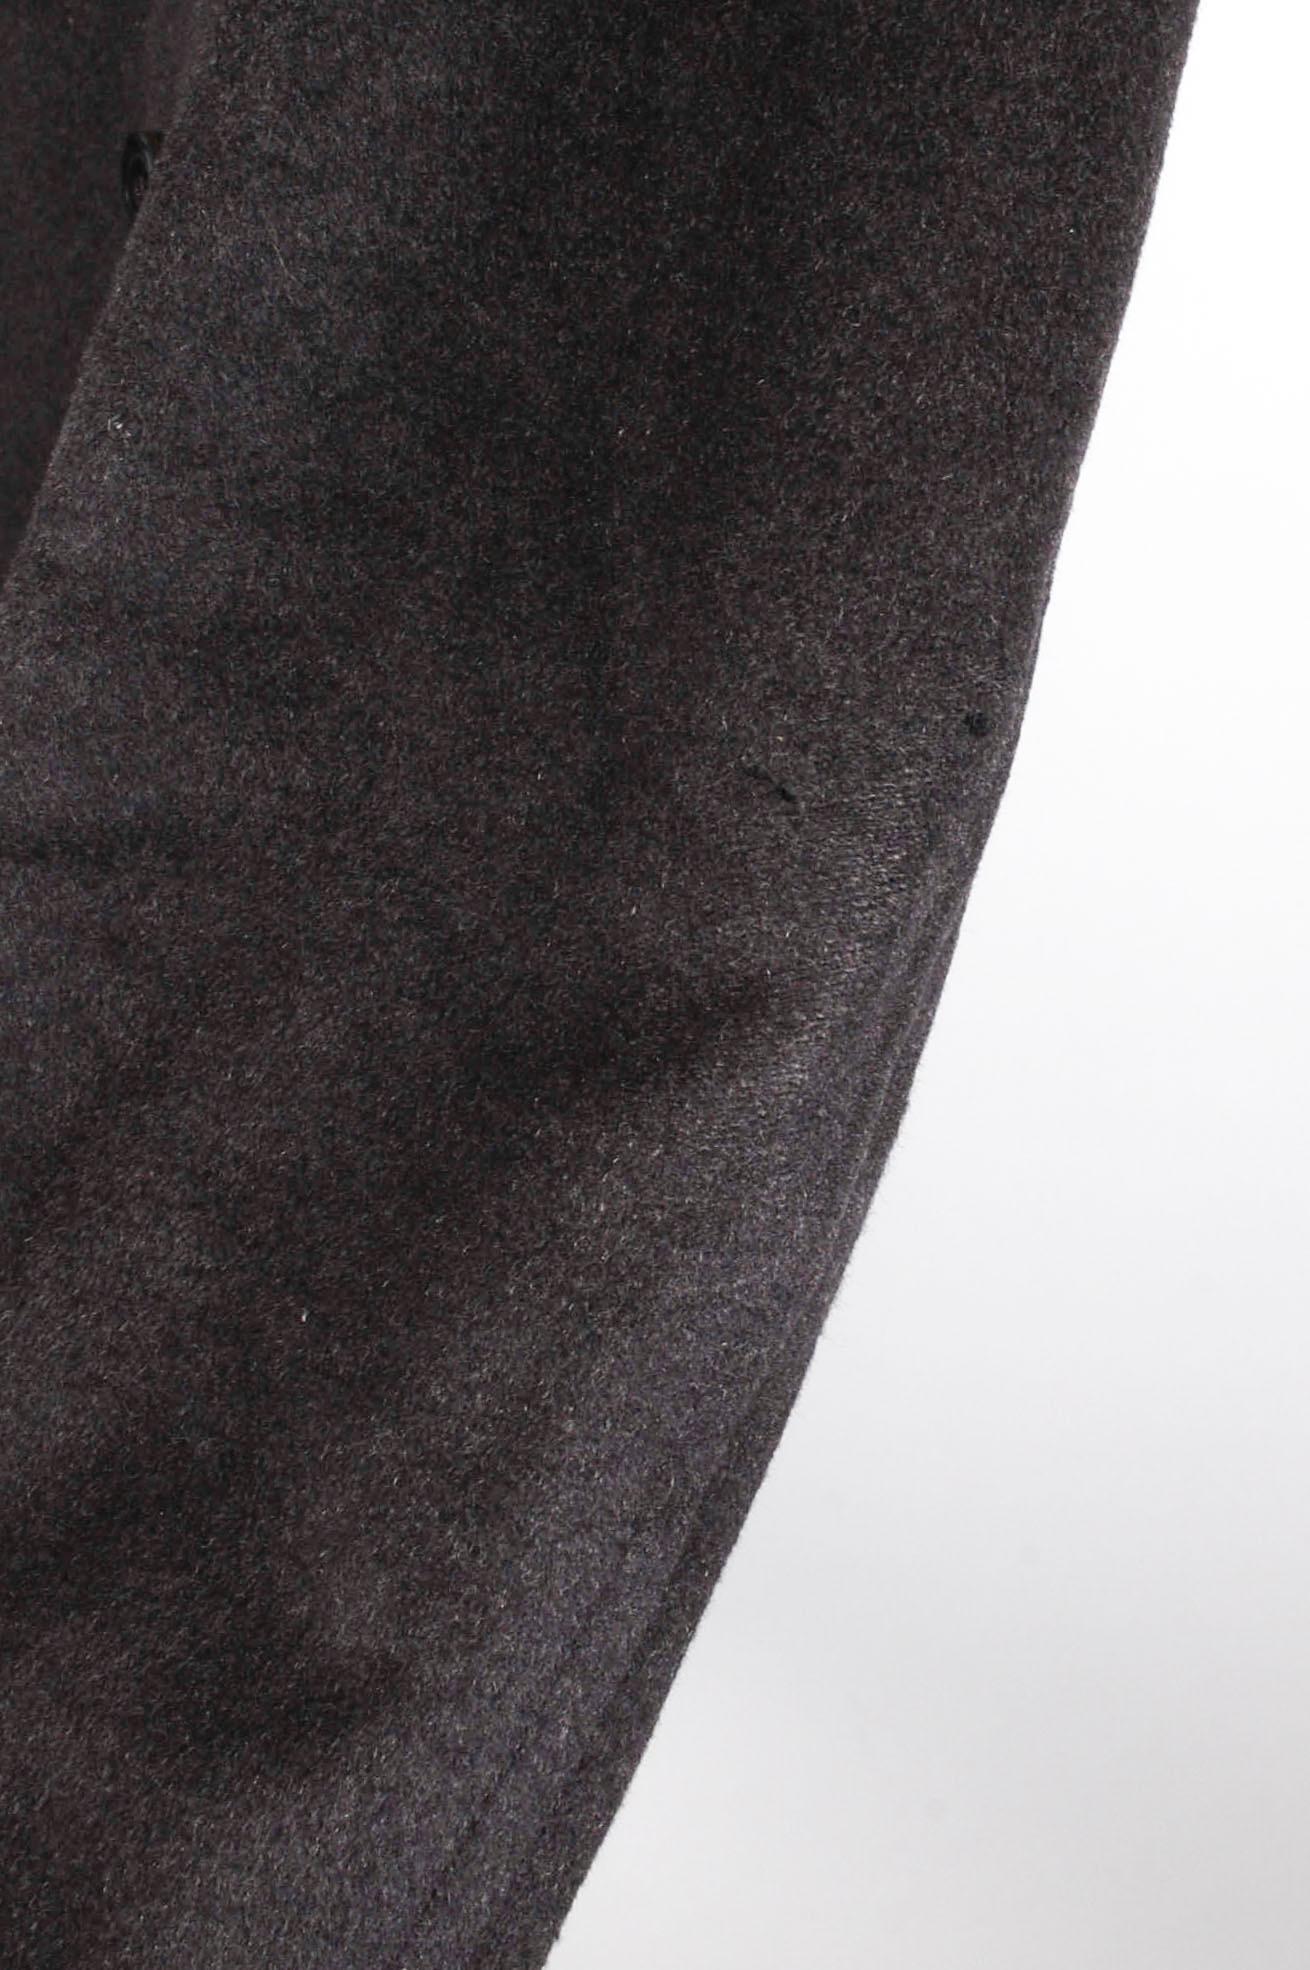 Dior Homme Hedi Slimane Leather Details Peacoat Men Coat Size 48IT (M/L) 2